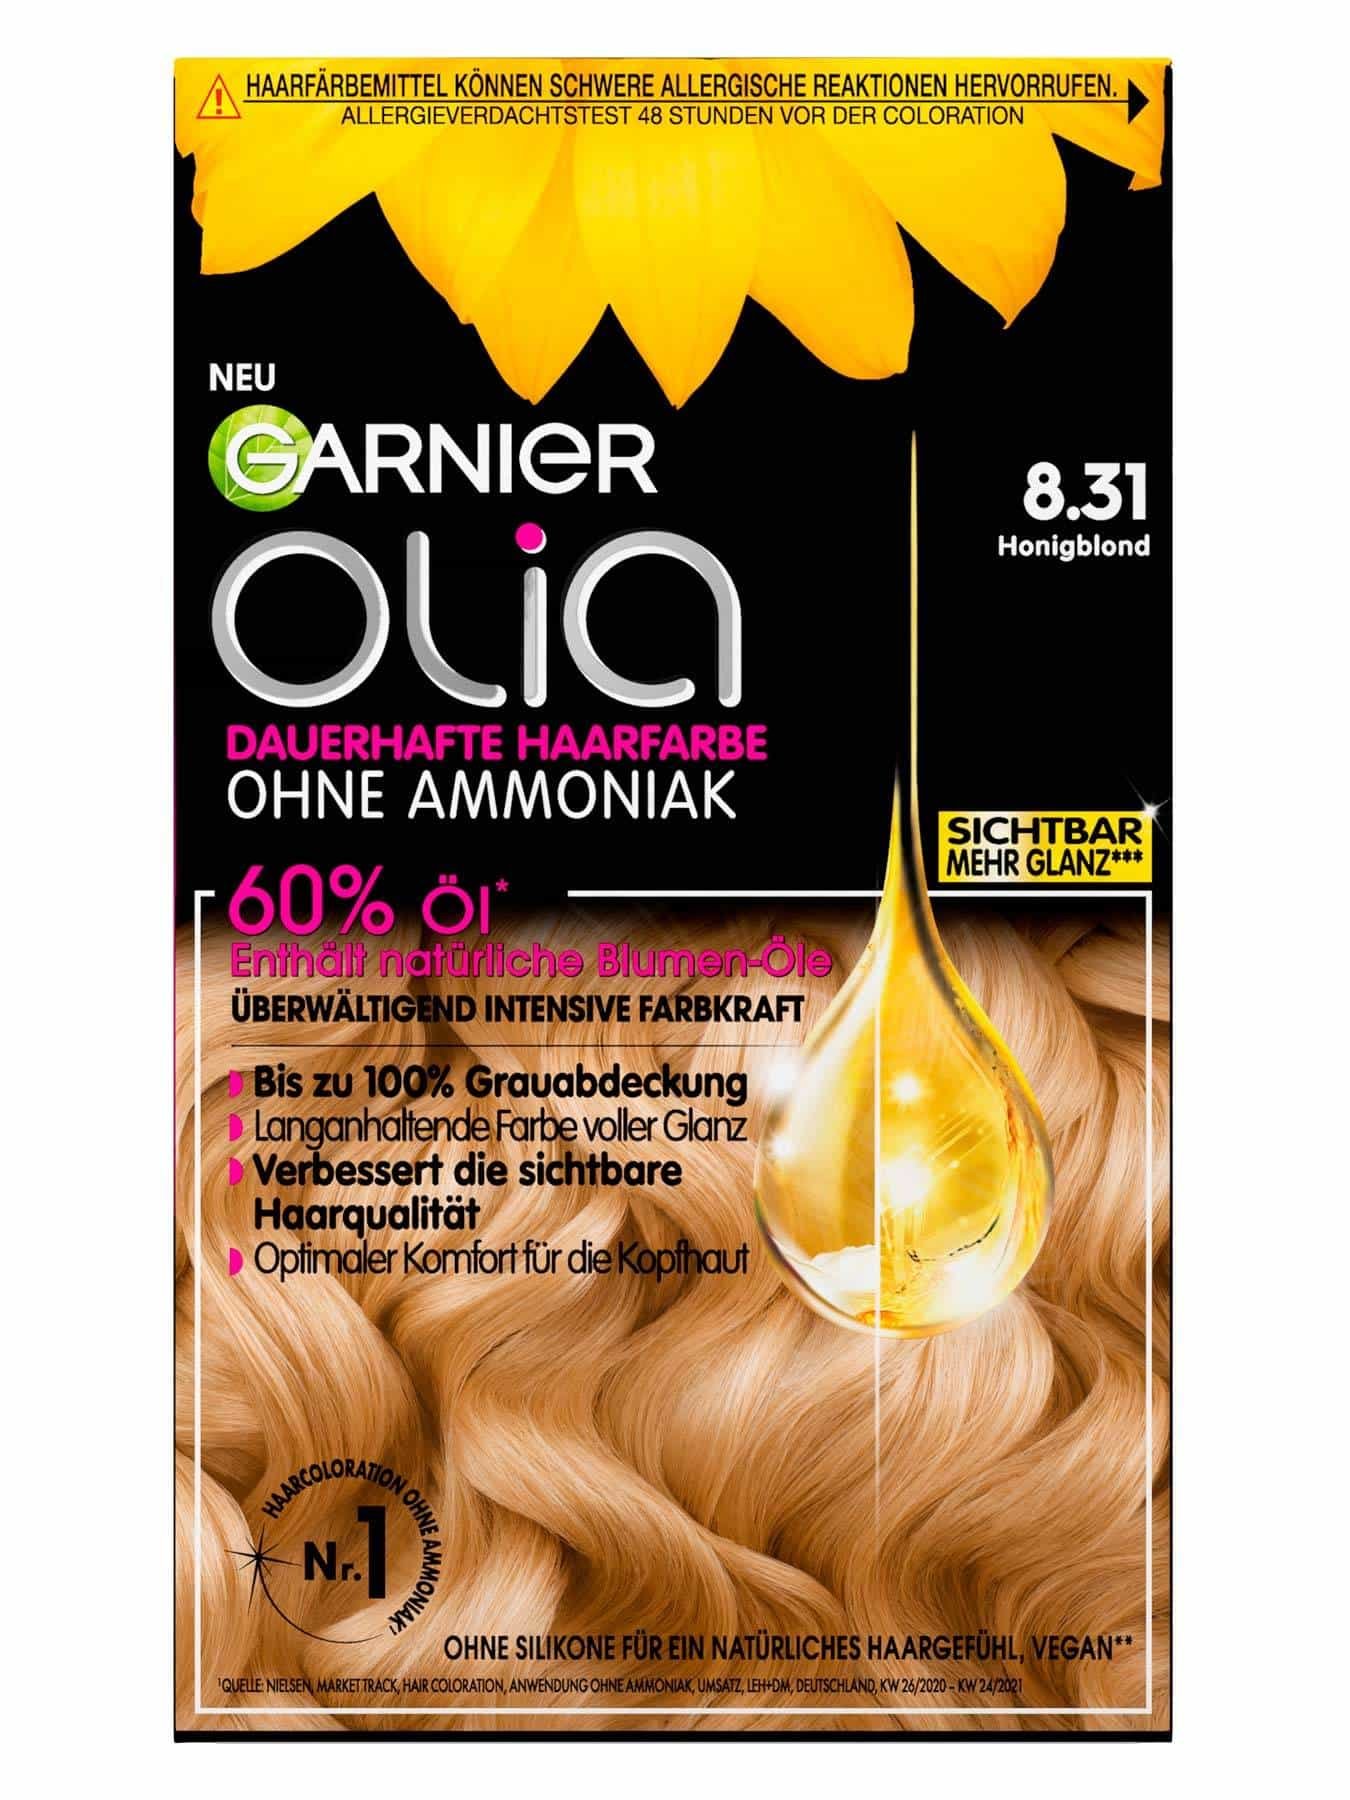 Nr. 8.31 in Honigblond – dauerhafte Haarfarbe | Garnier